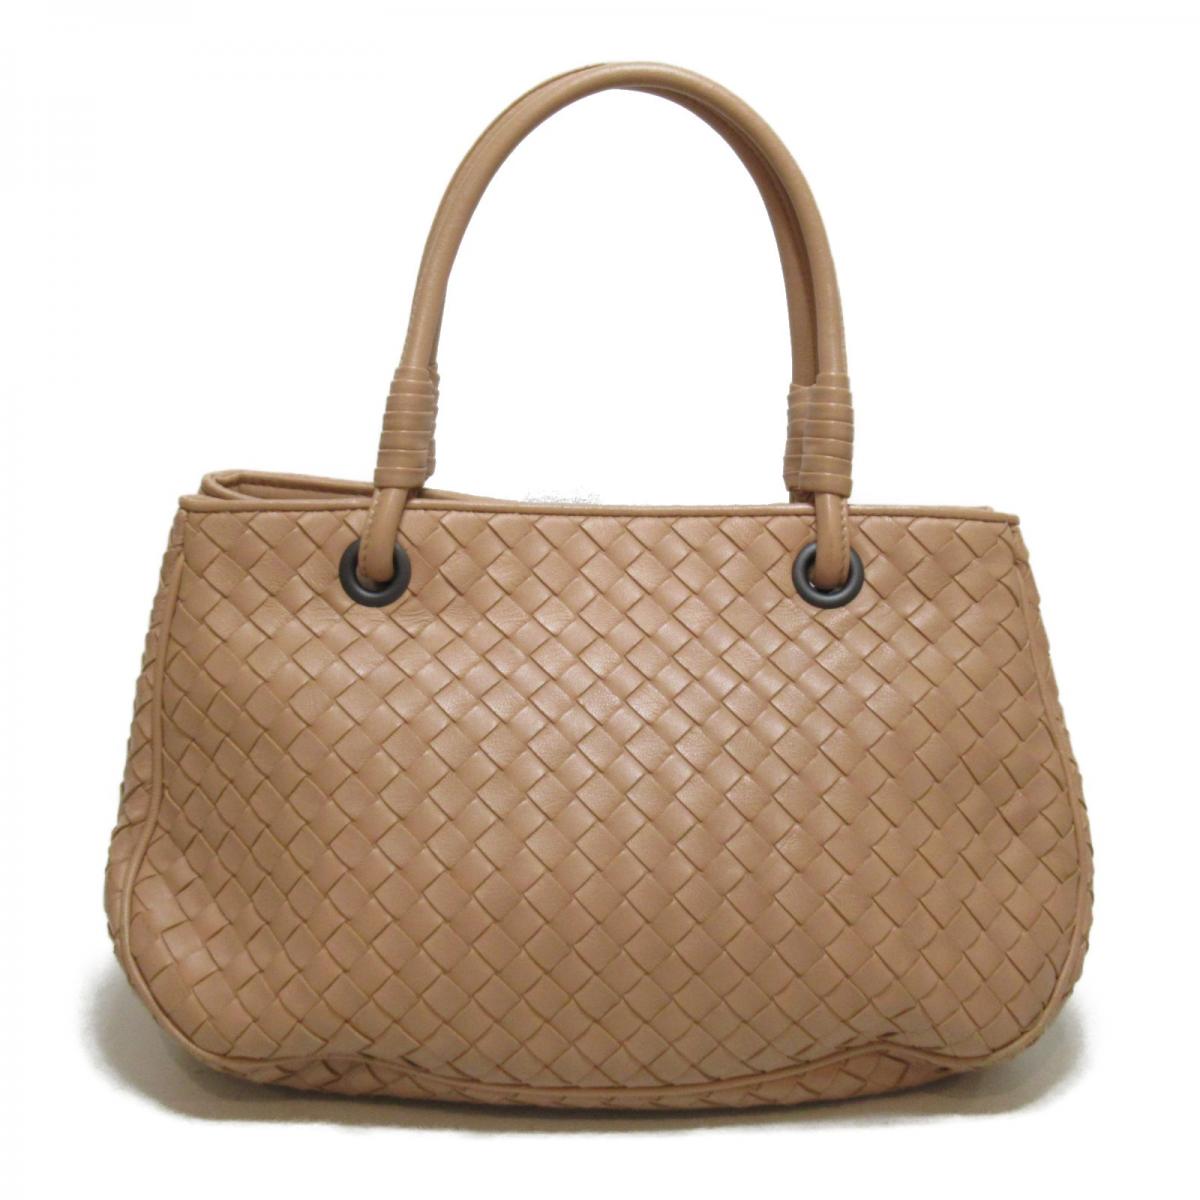 Intrecciato Leather Handbag